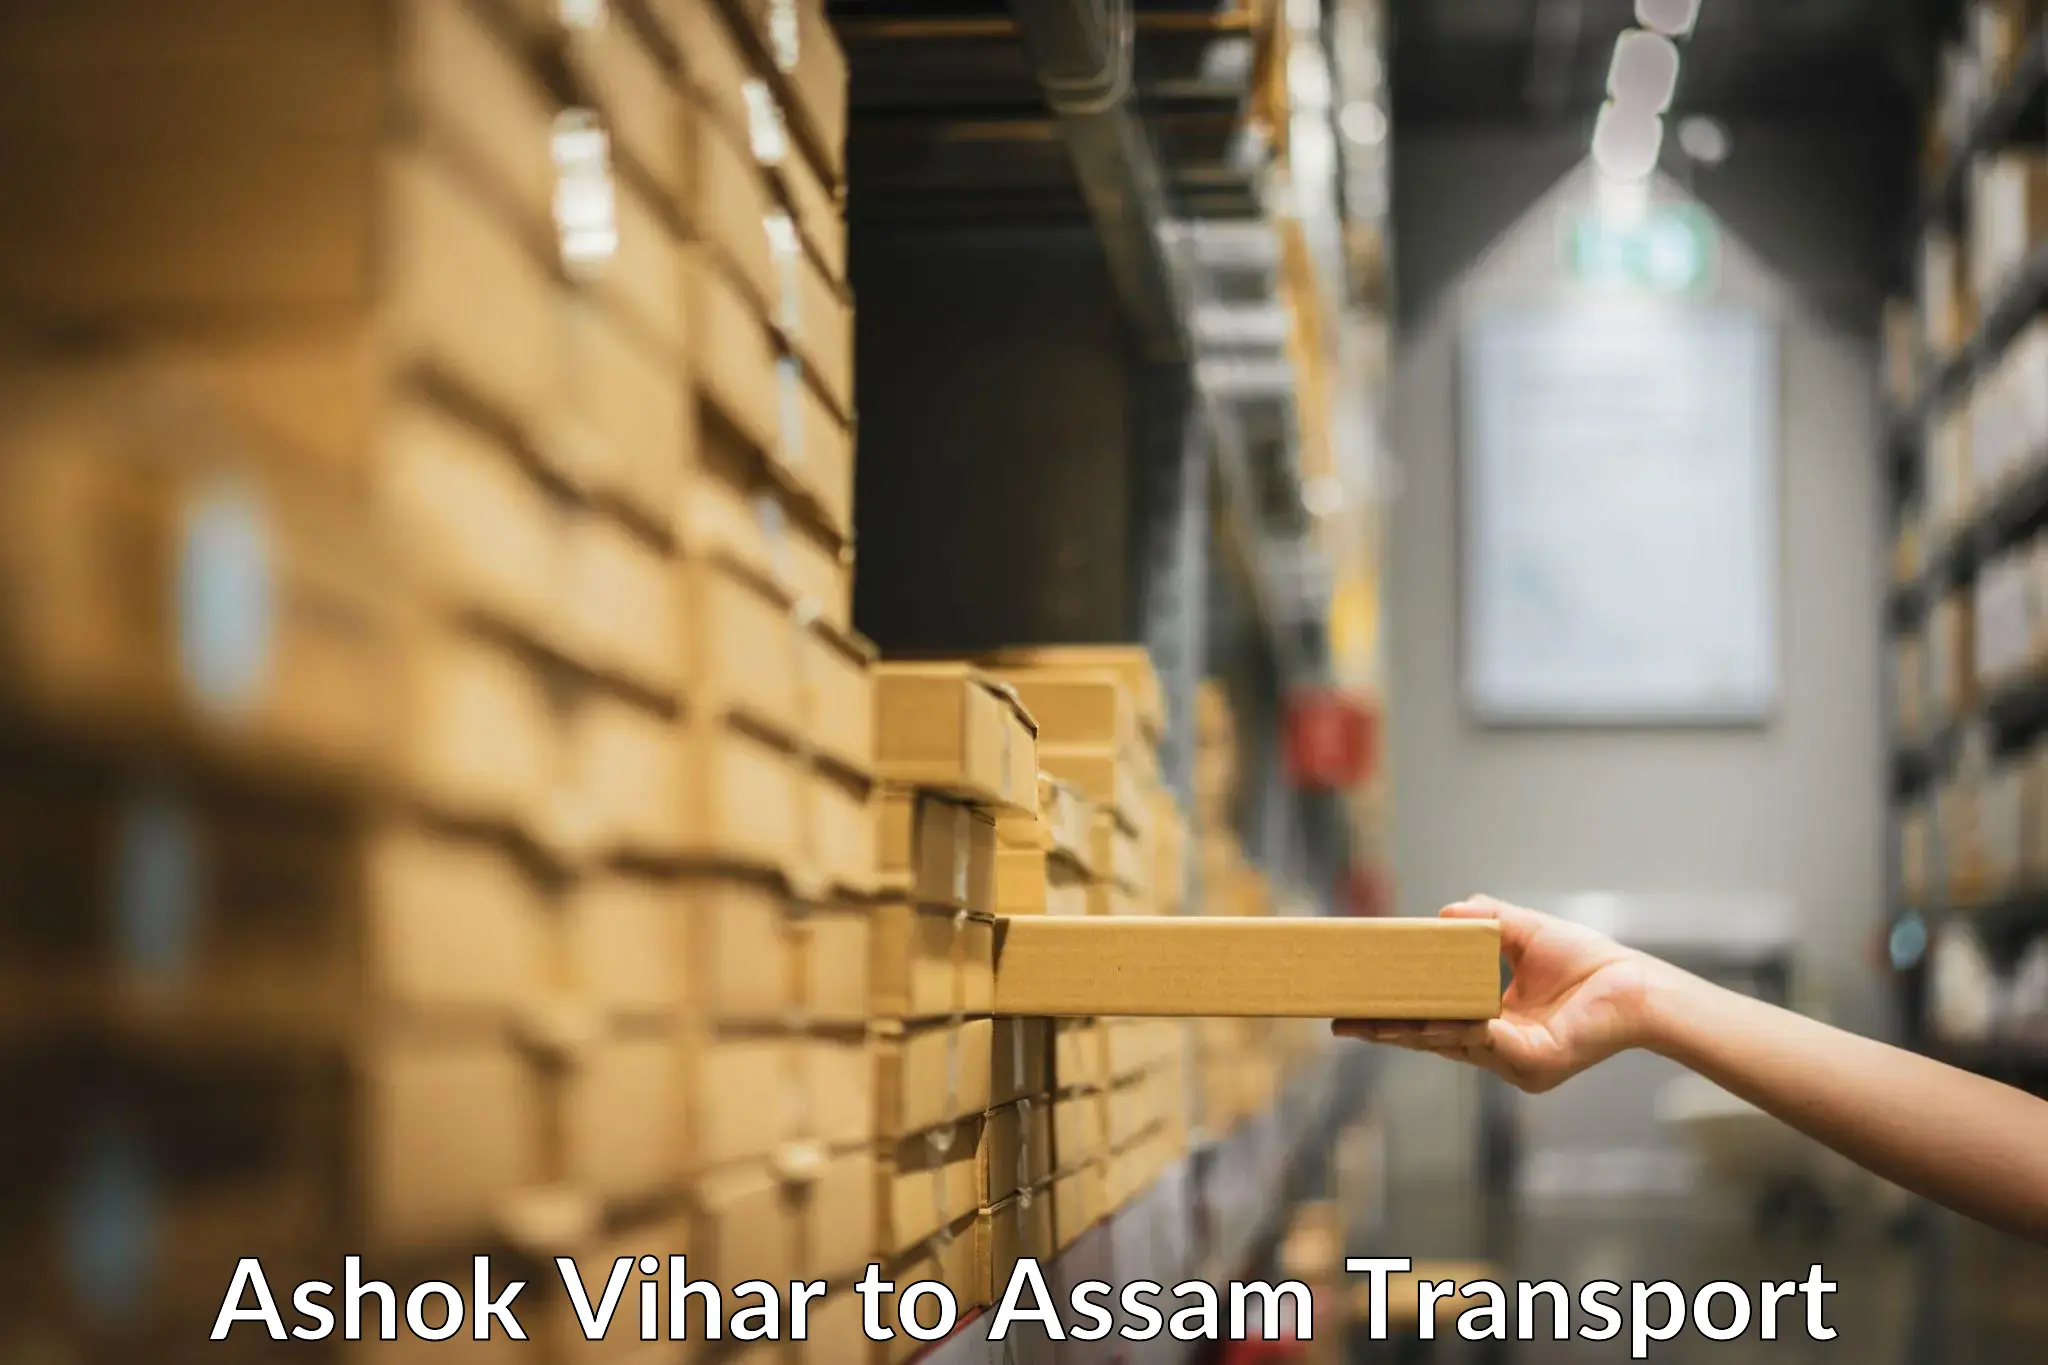 Truck transport companies in India Ashok Vihar to Teok